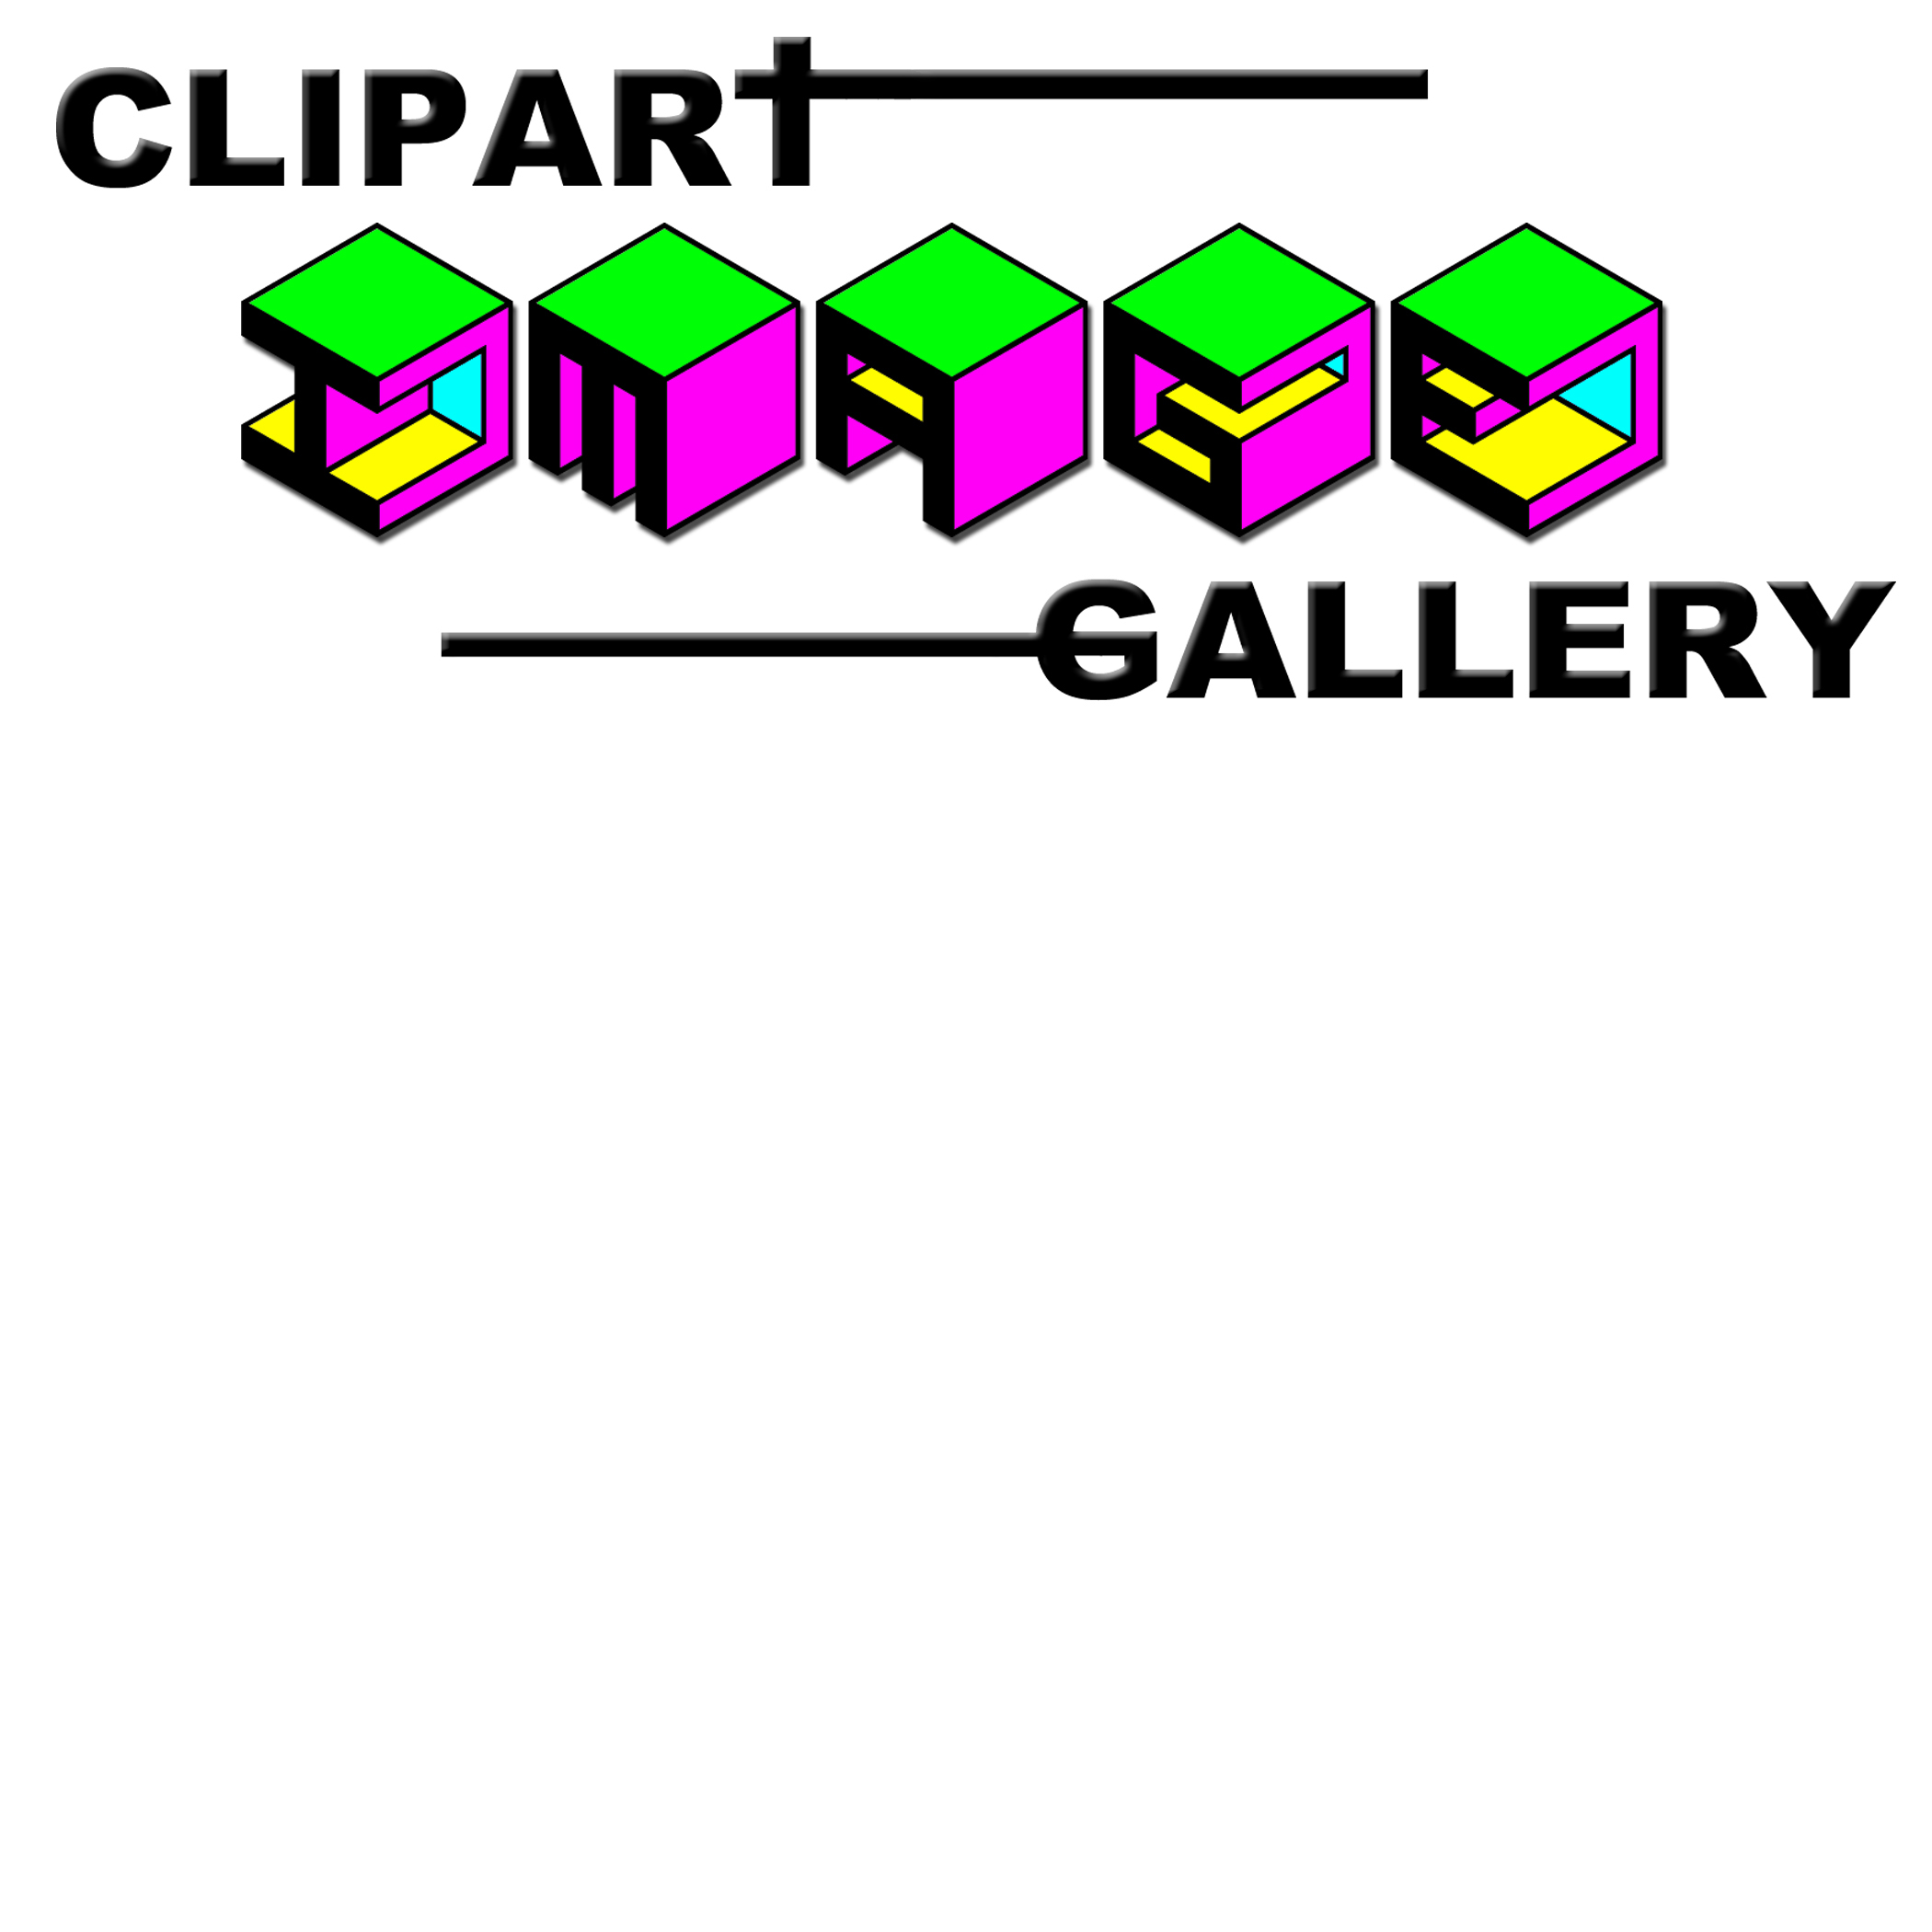 College Logos Clip Art Clipart image gallery logo